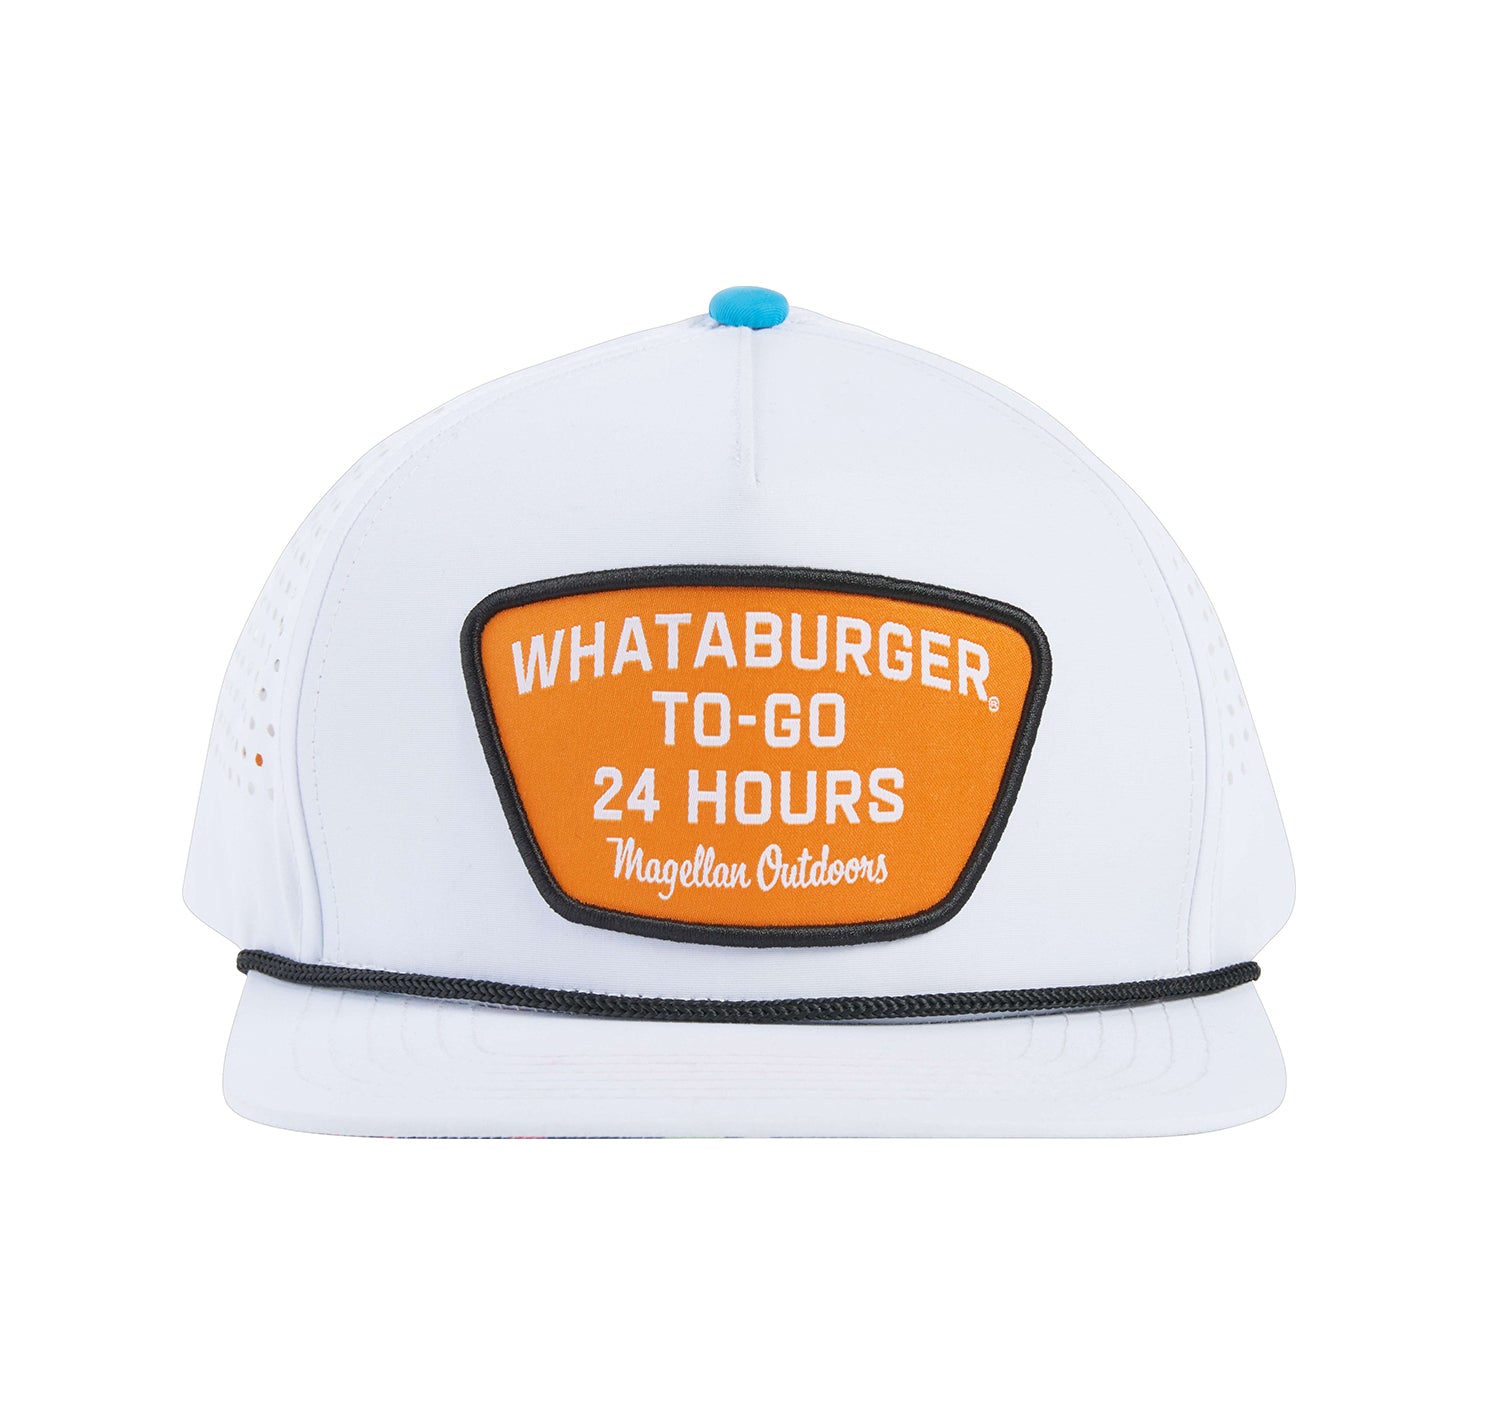 Whataburger Employee Uniform Black Orange Hat with Adjustable Strapback Cap  Gear